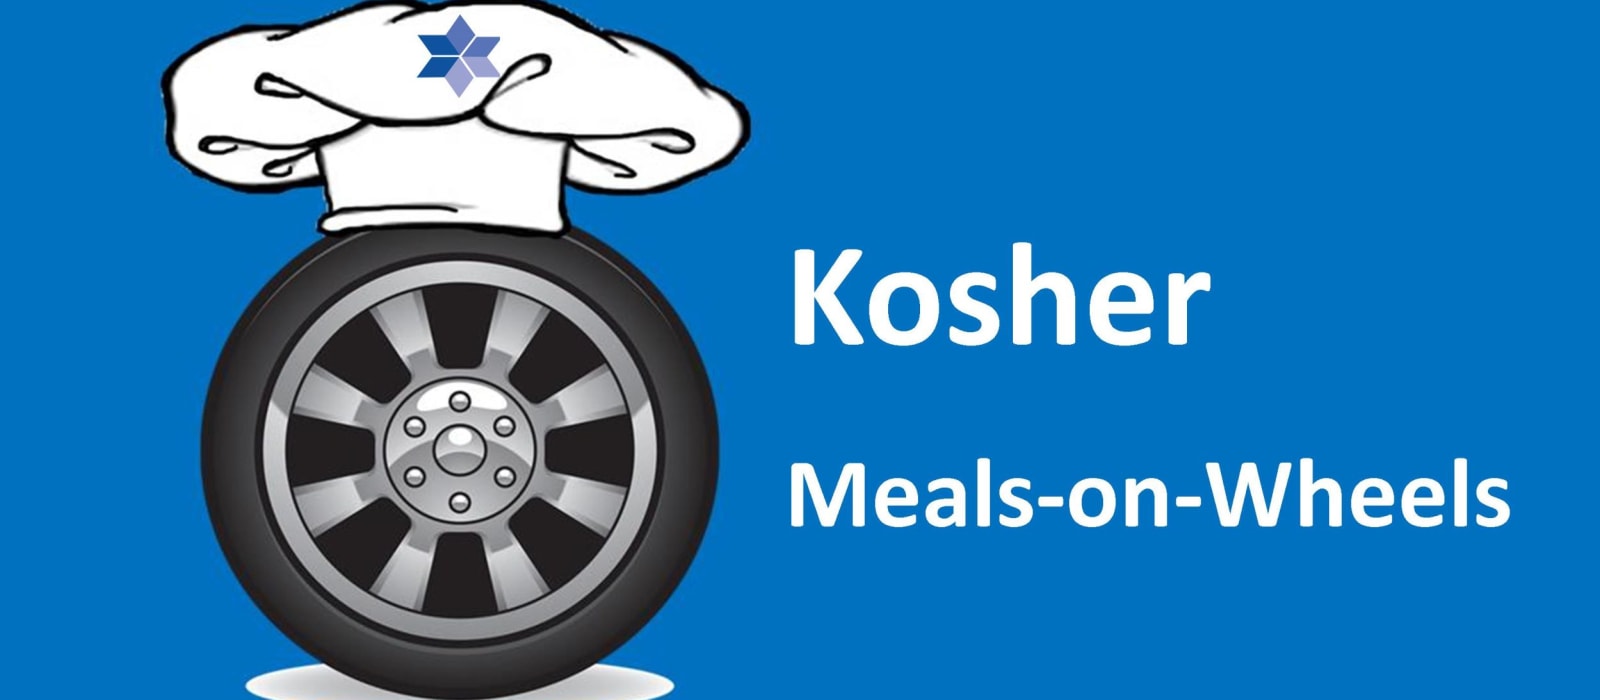 Kosher meals on wheels